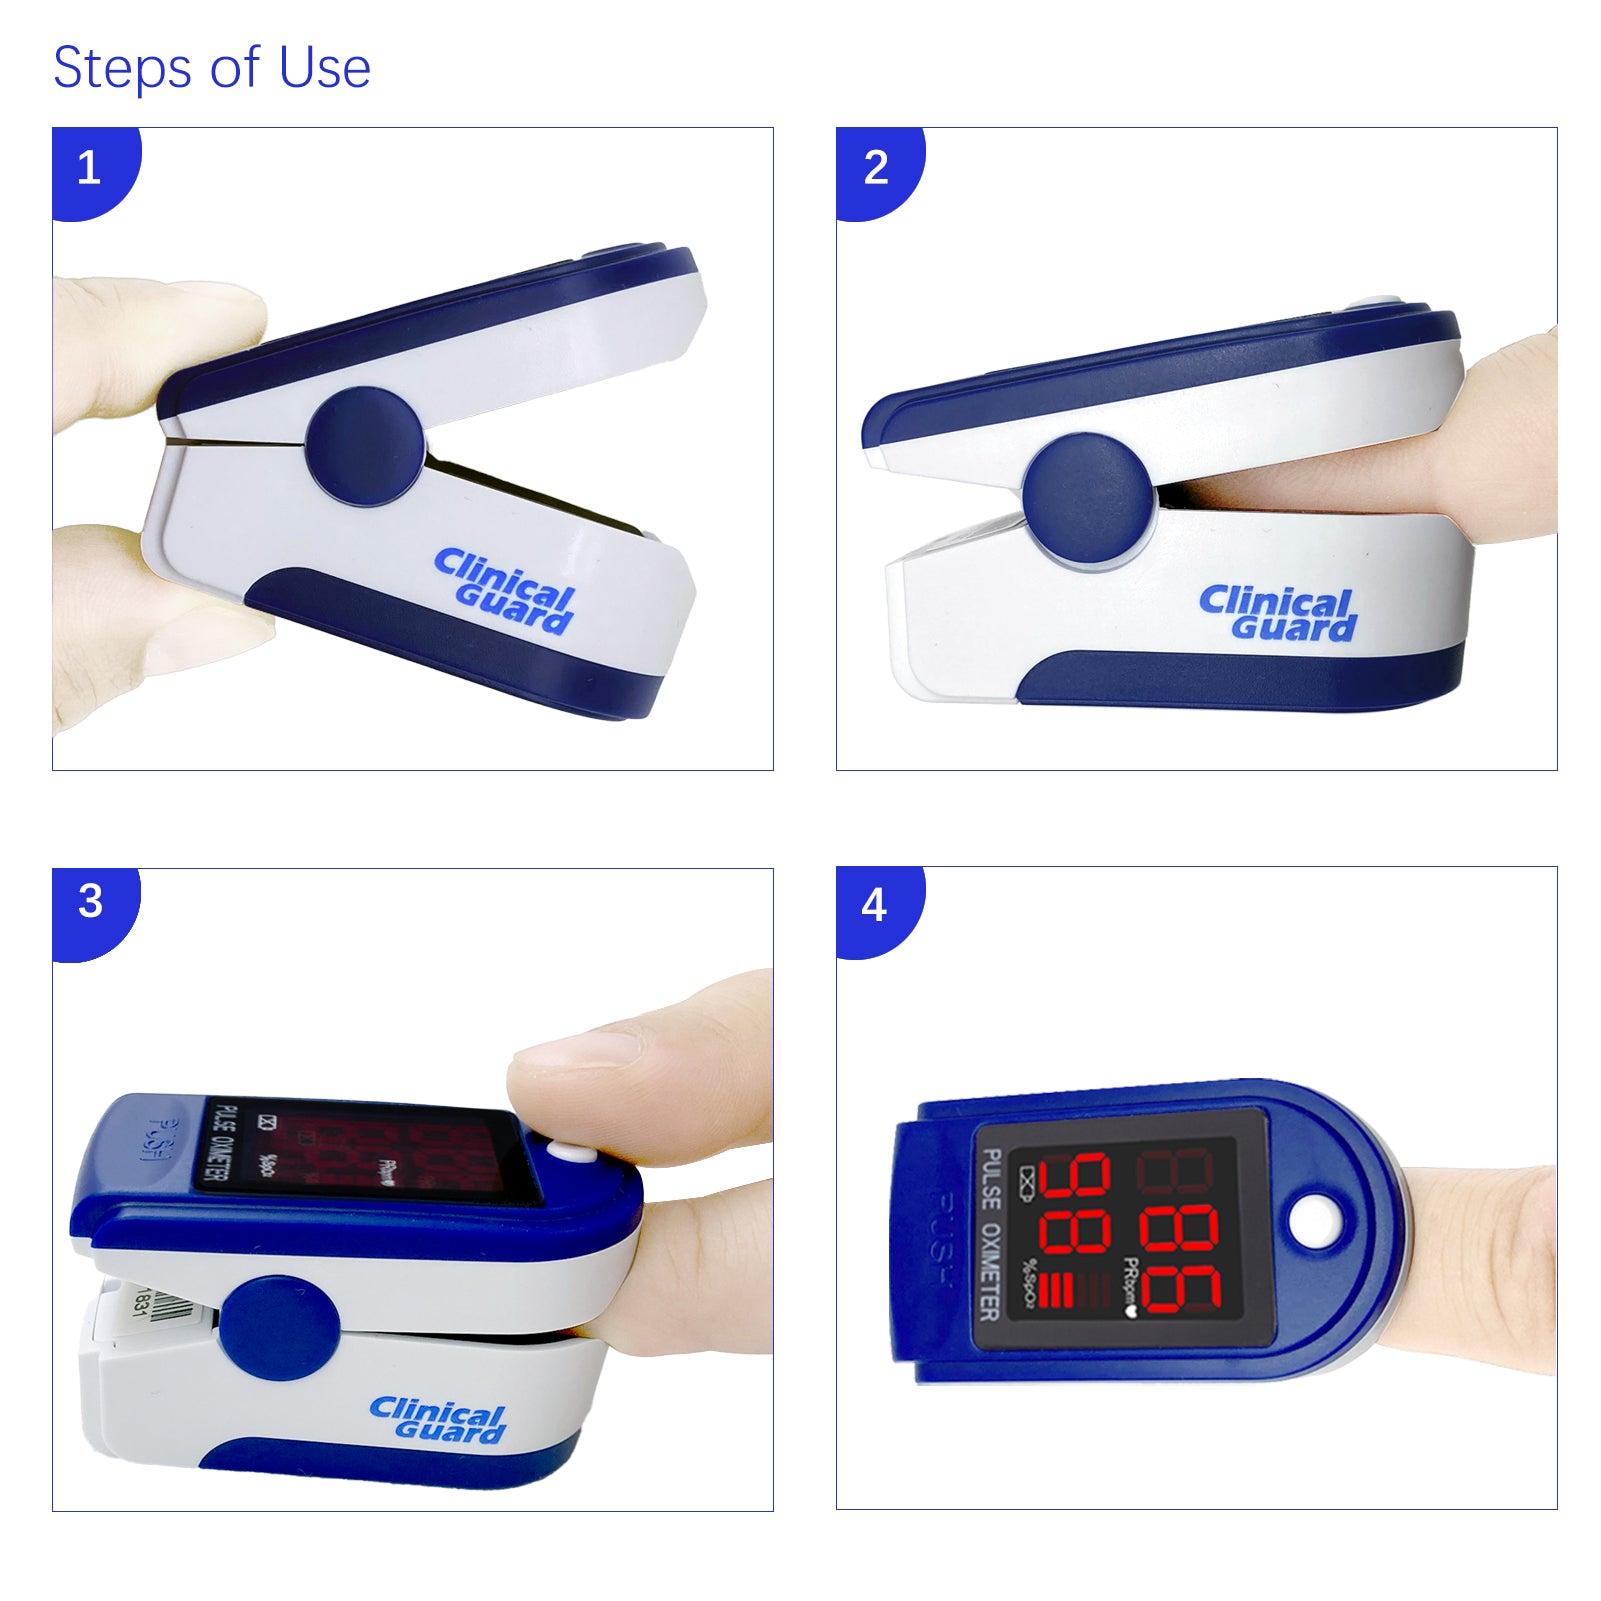 Finger Pulse Oximeter Clinical Guard 50DL Image 6 - User's Guide